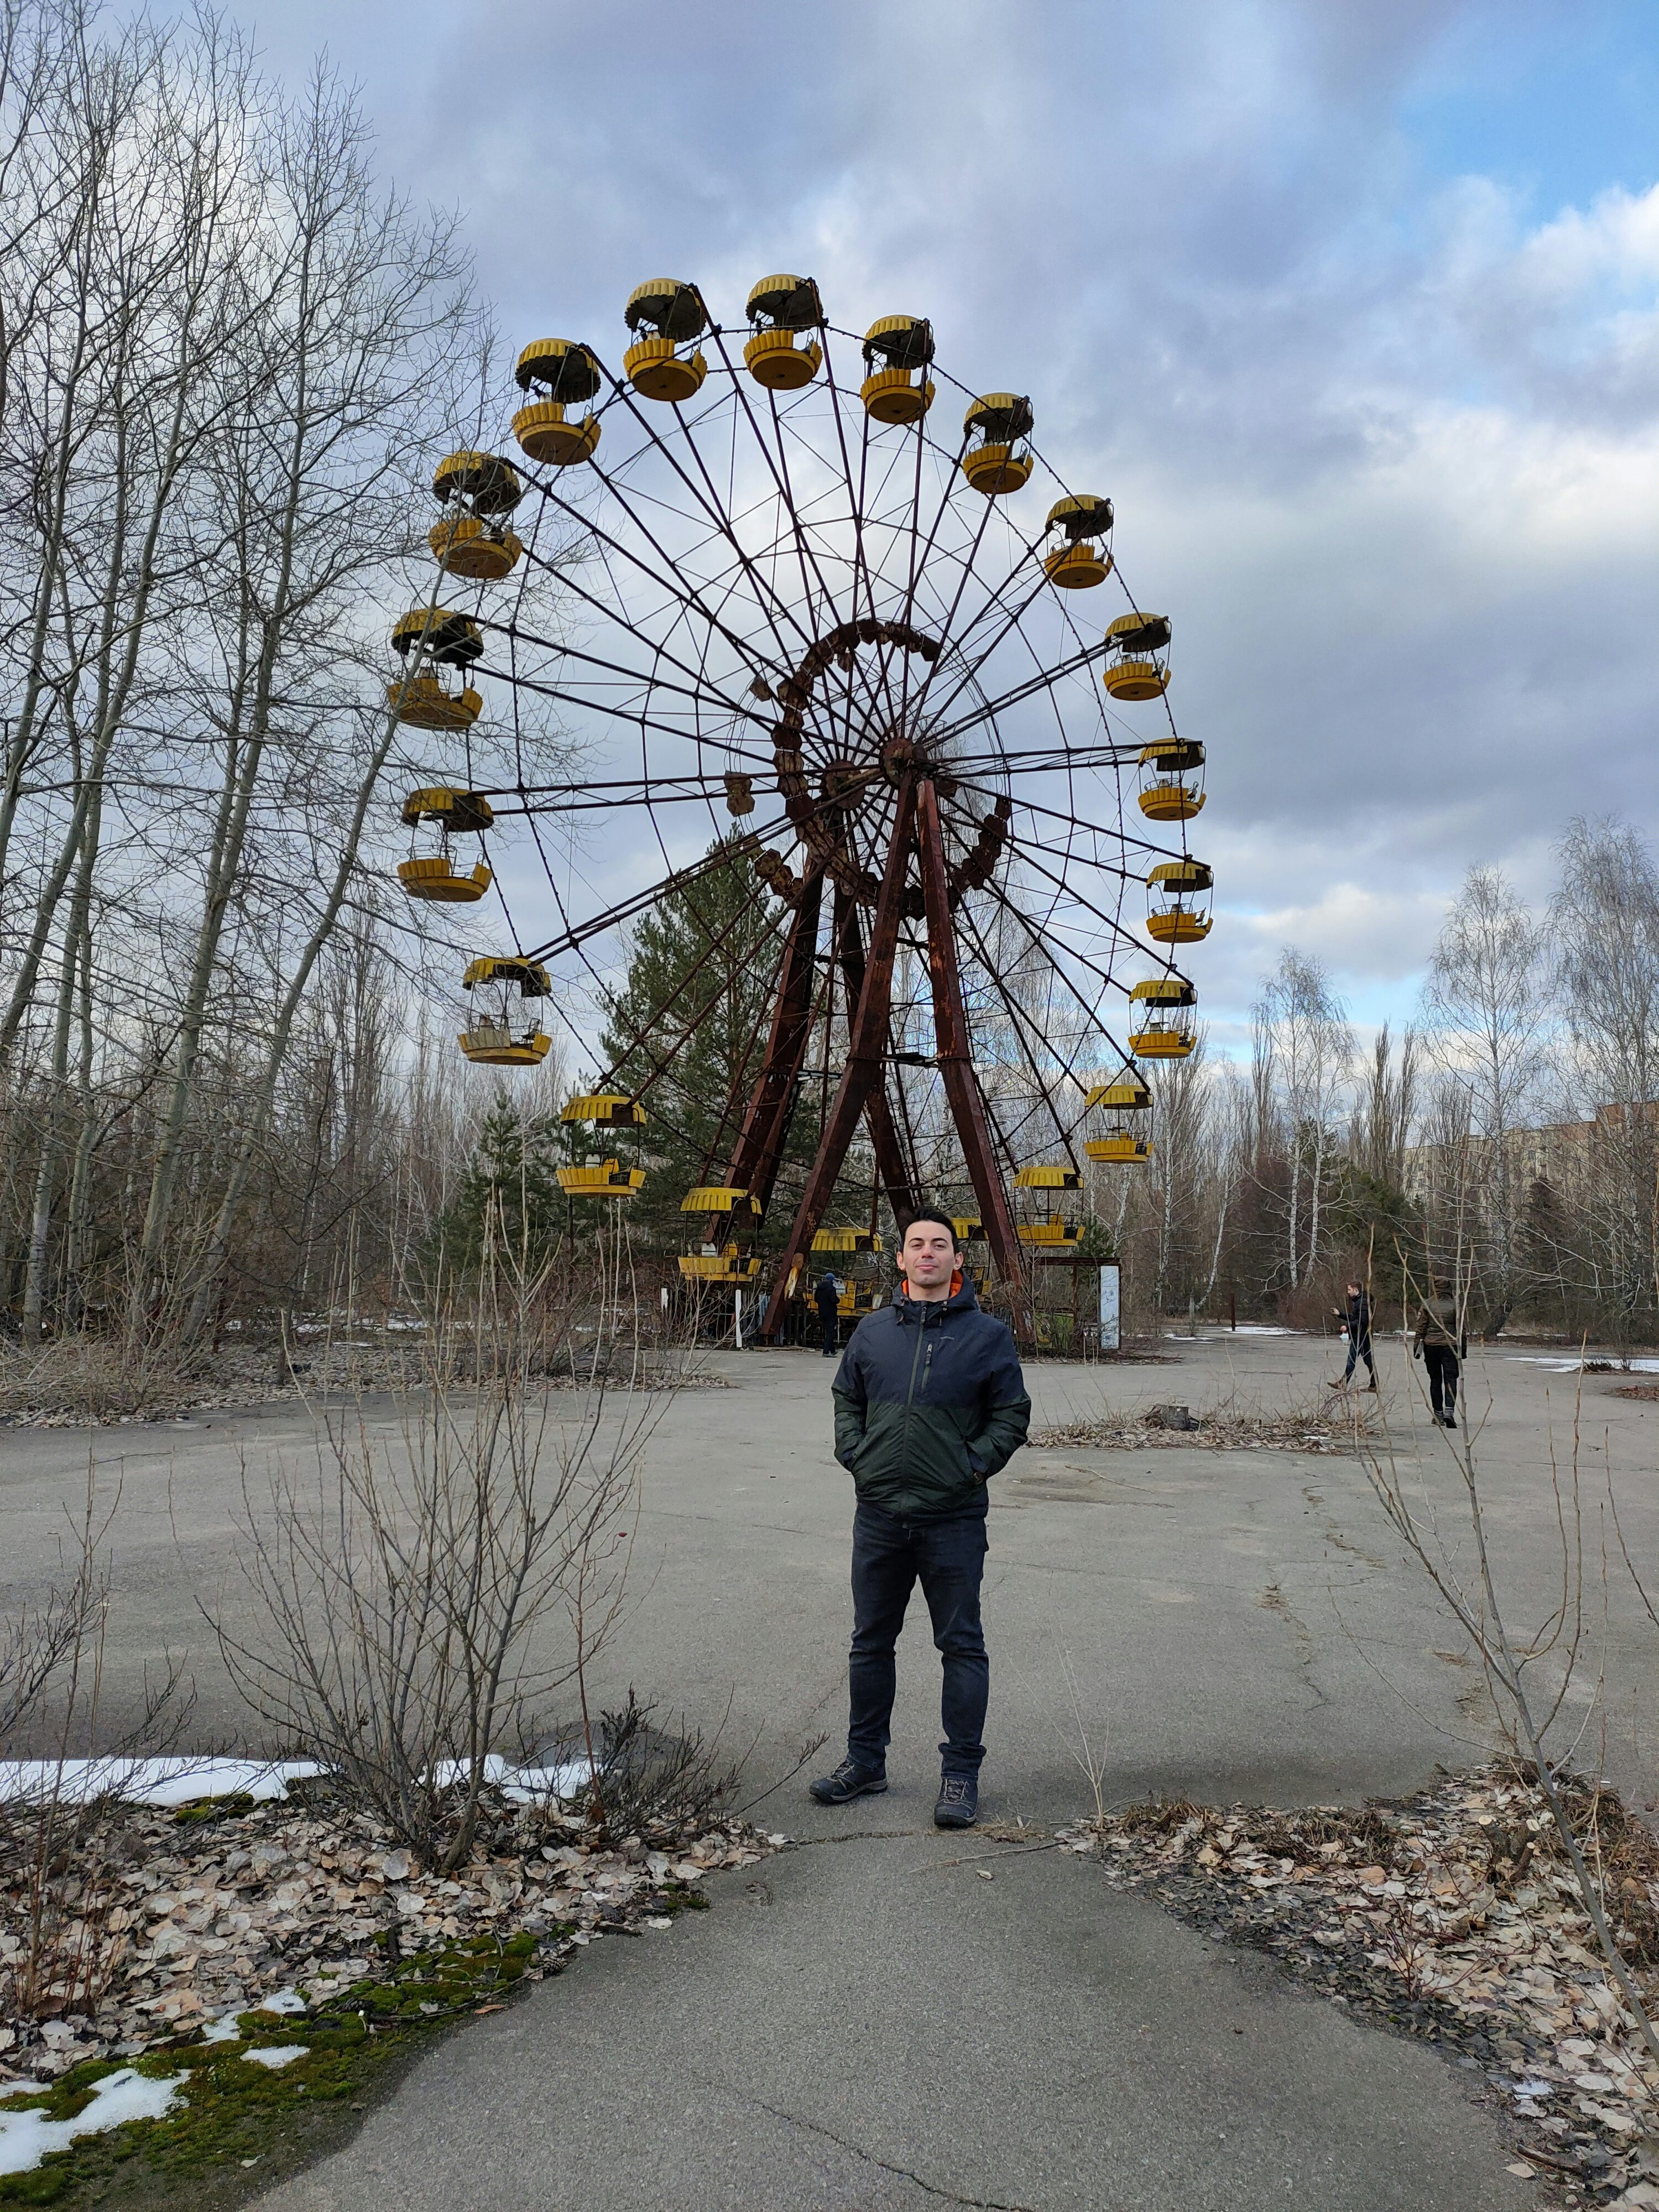 An image from Chernobyl, Ukraine